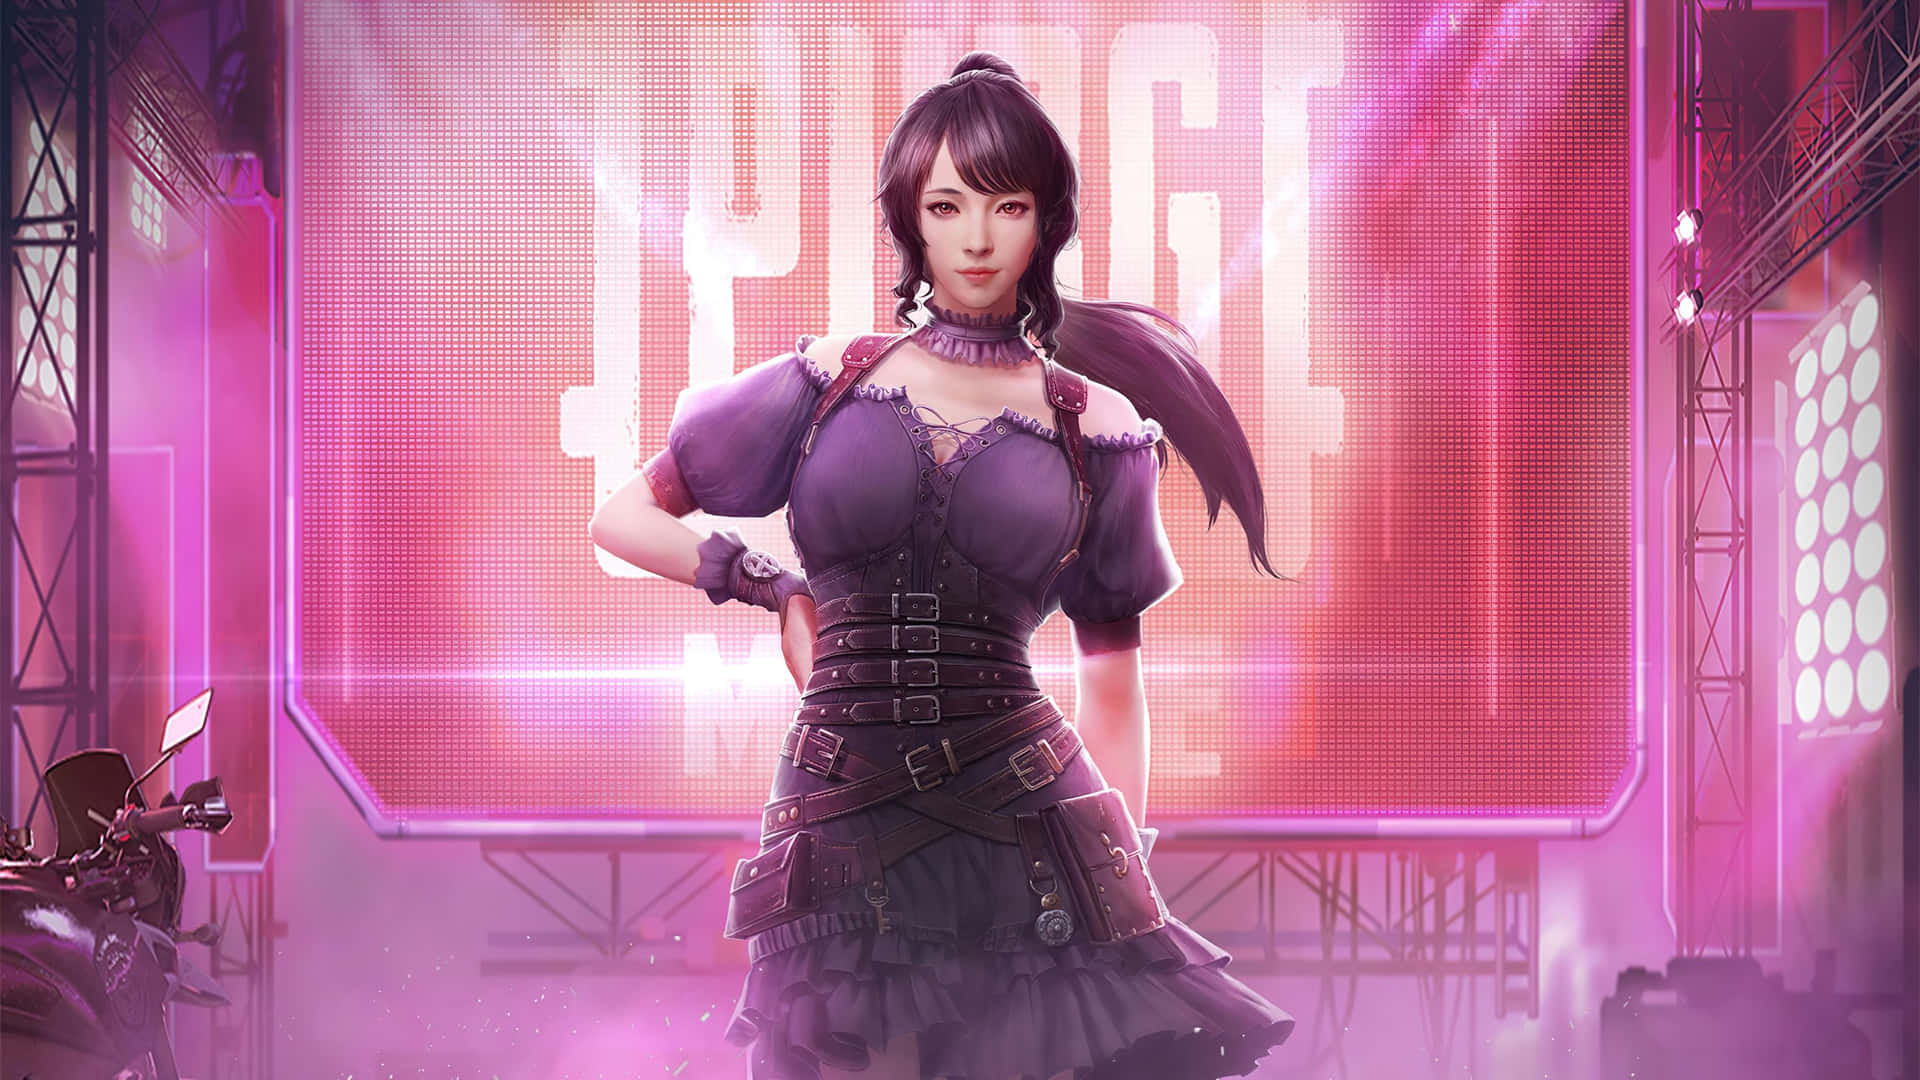 Caption: Fierce Pubg Gamer Girl With Purple Hair Background